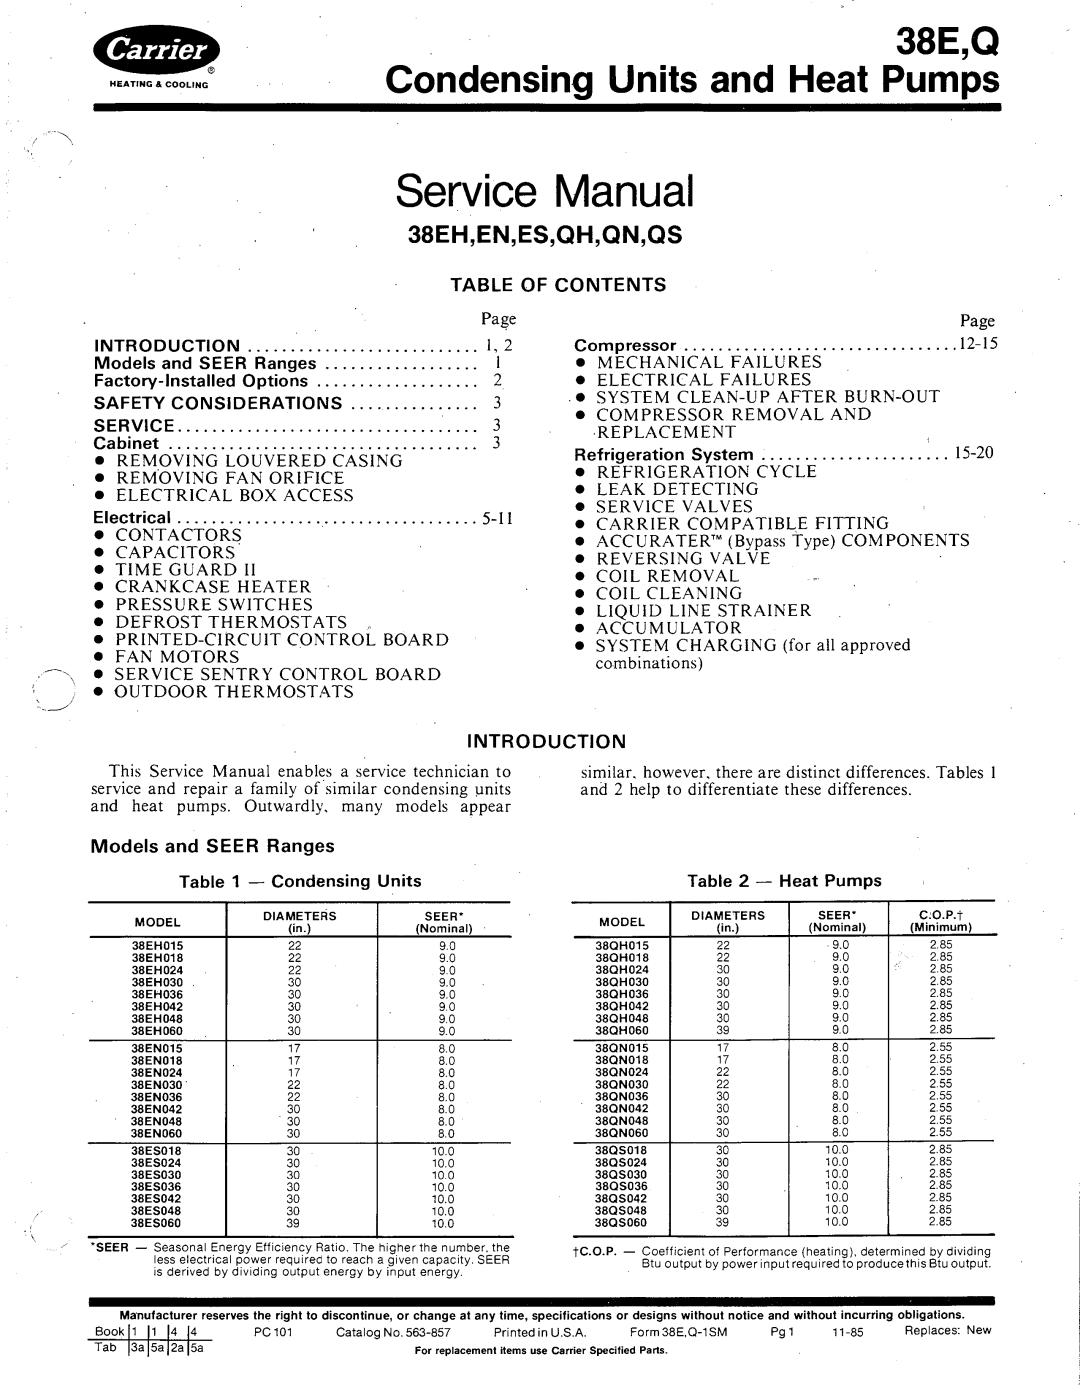 Carrier 38E manual 